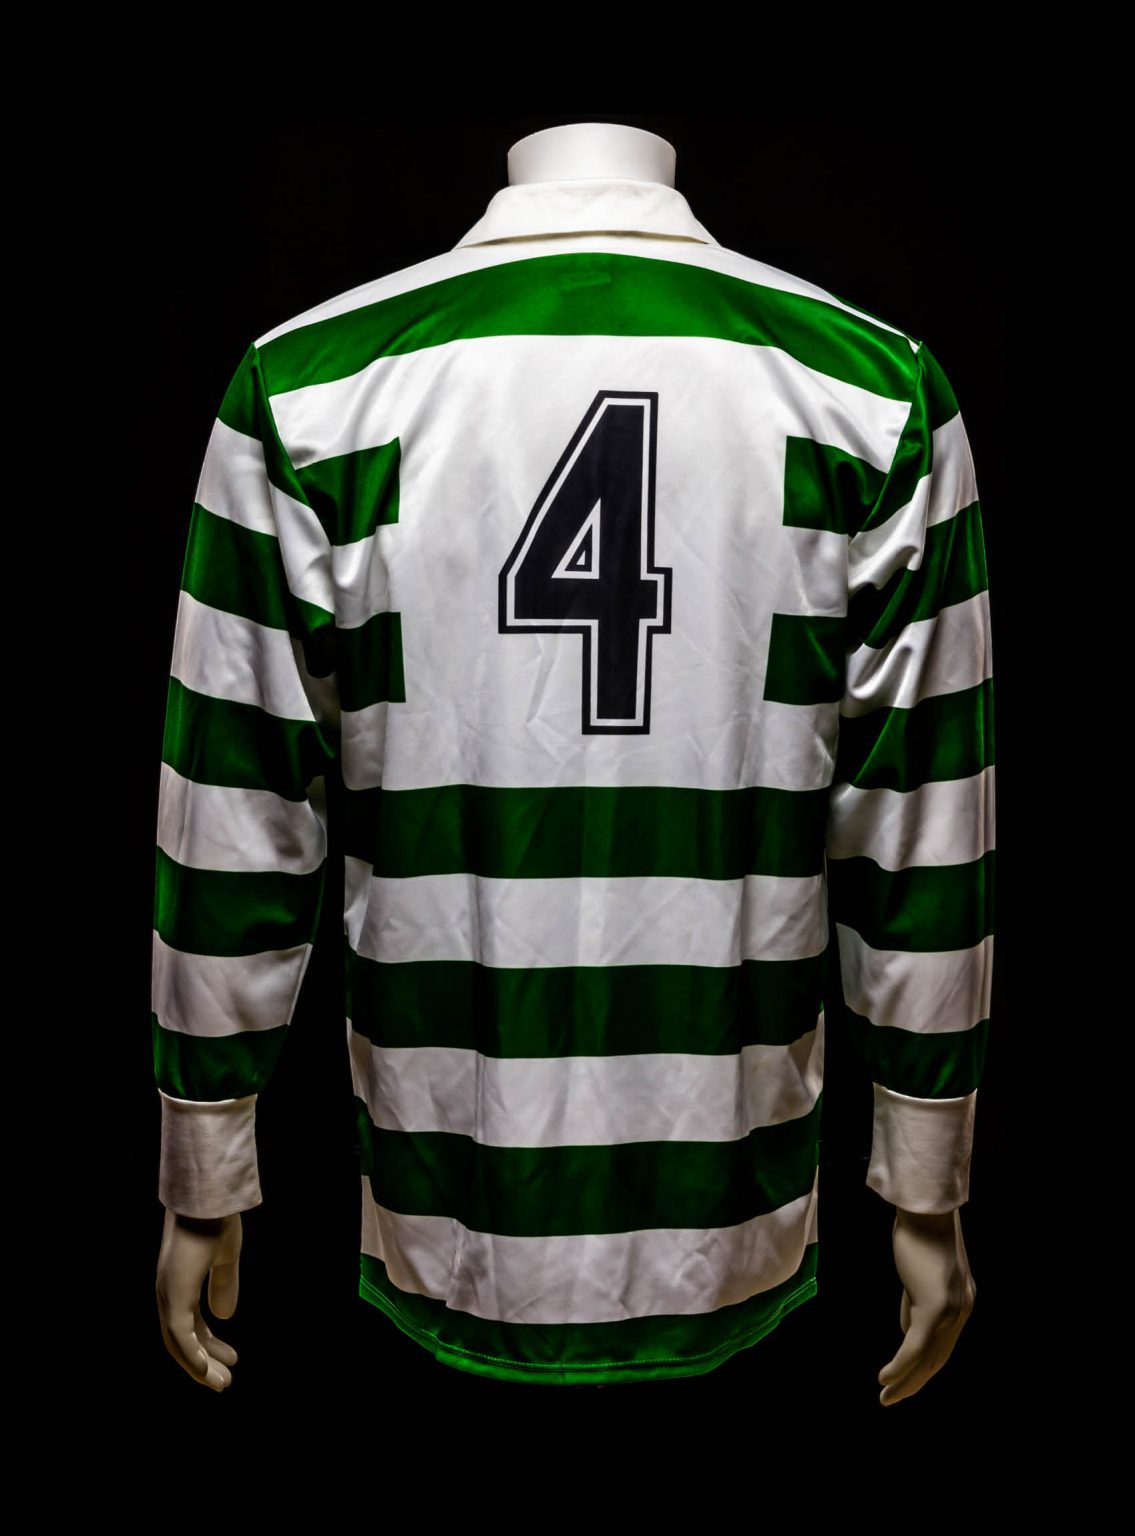 Sporting Lissabon Shirt UEFA Cup 1990-1991